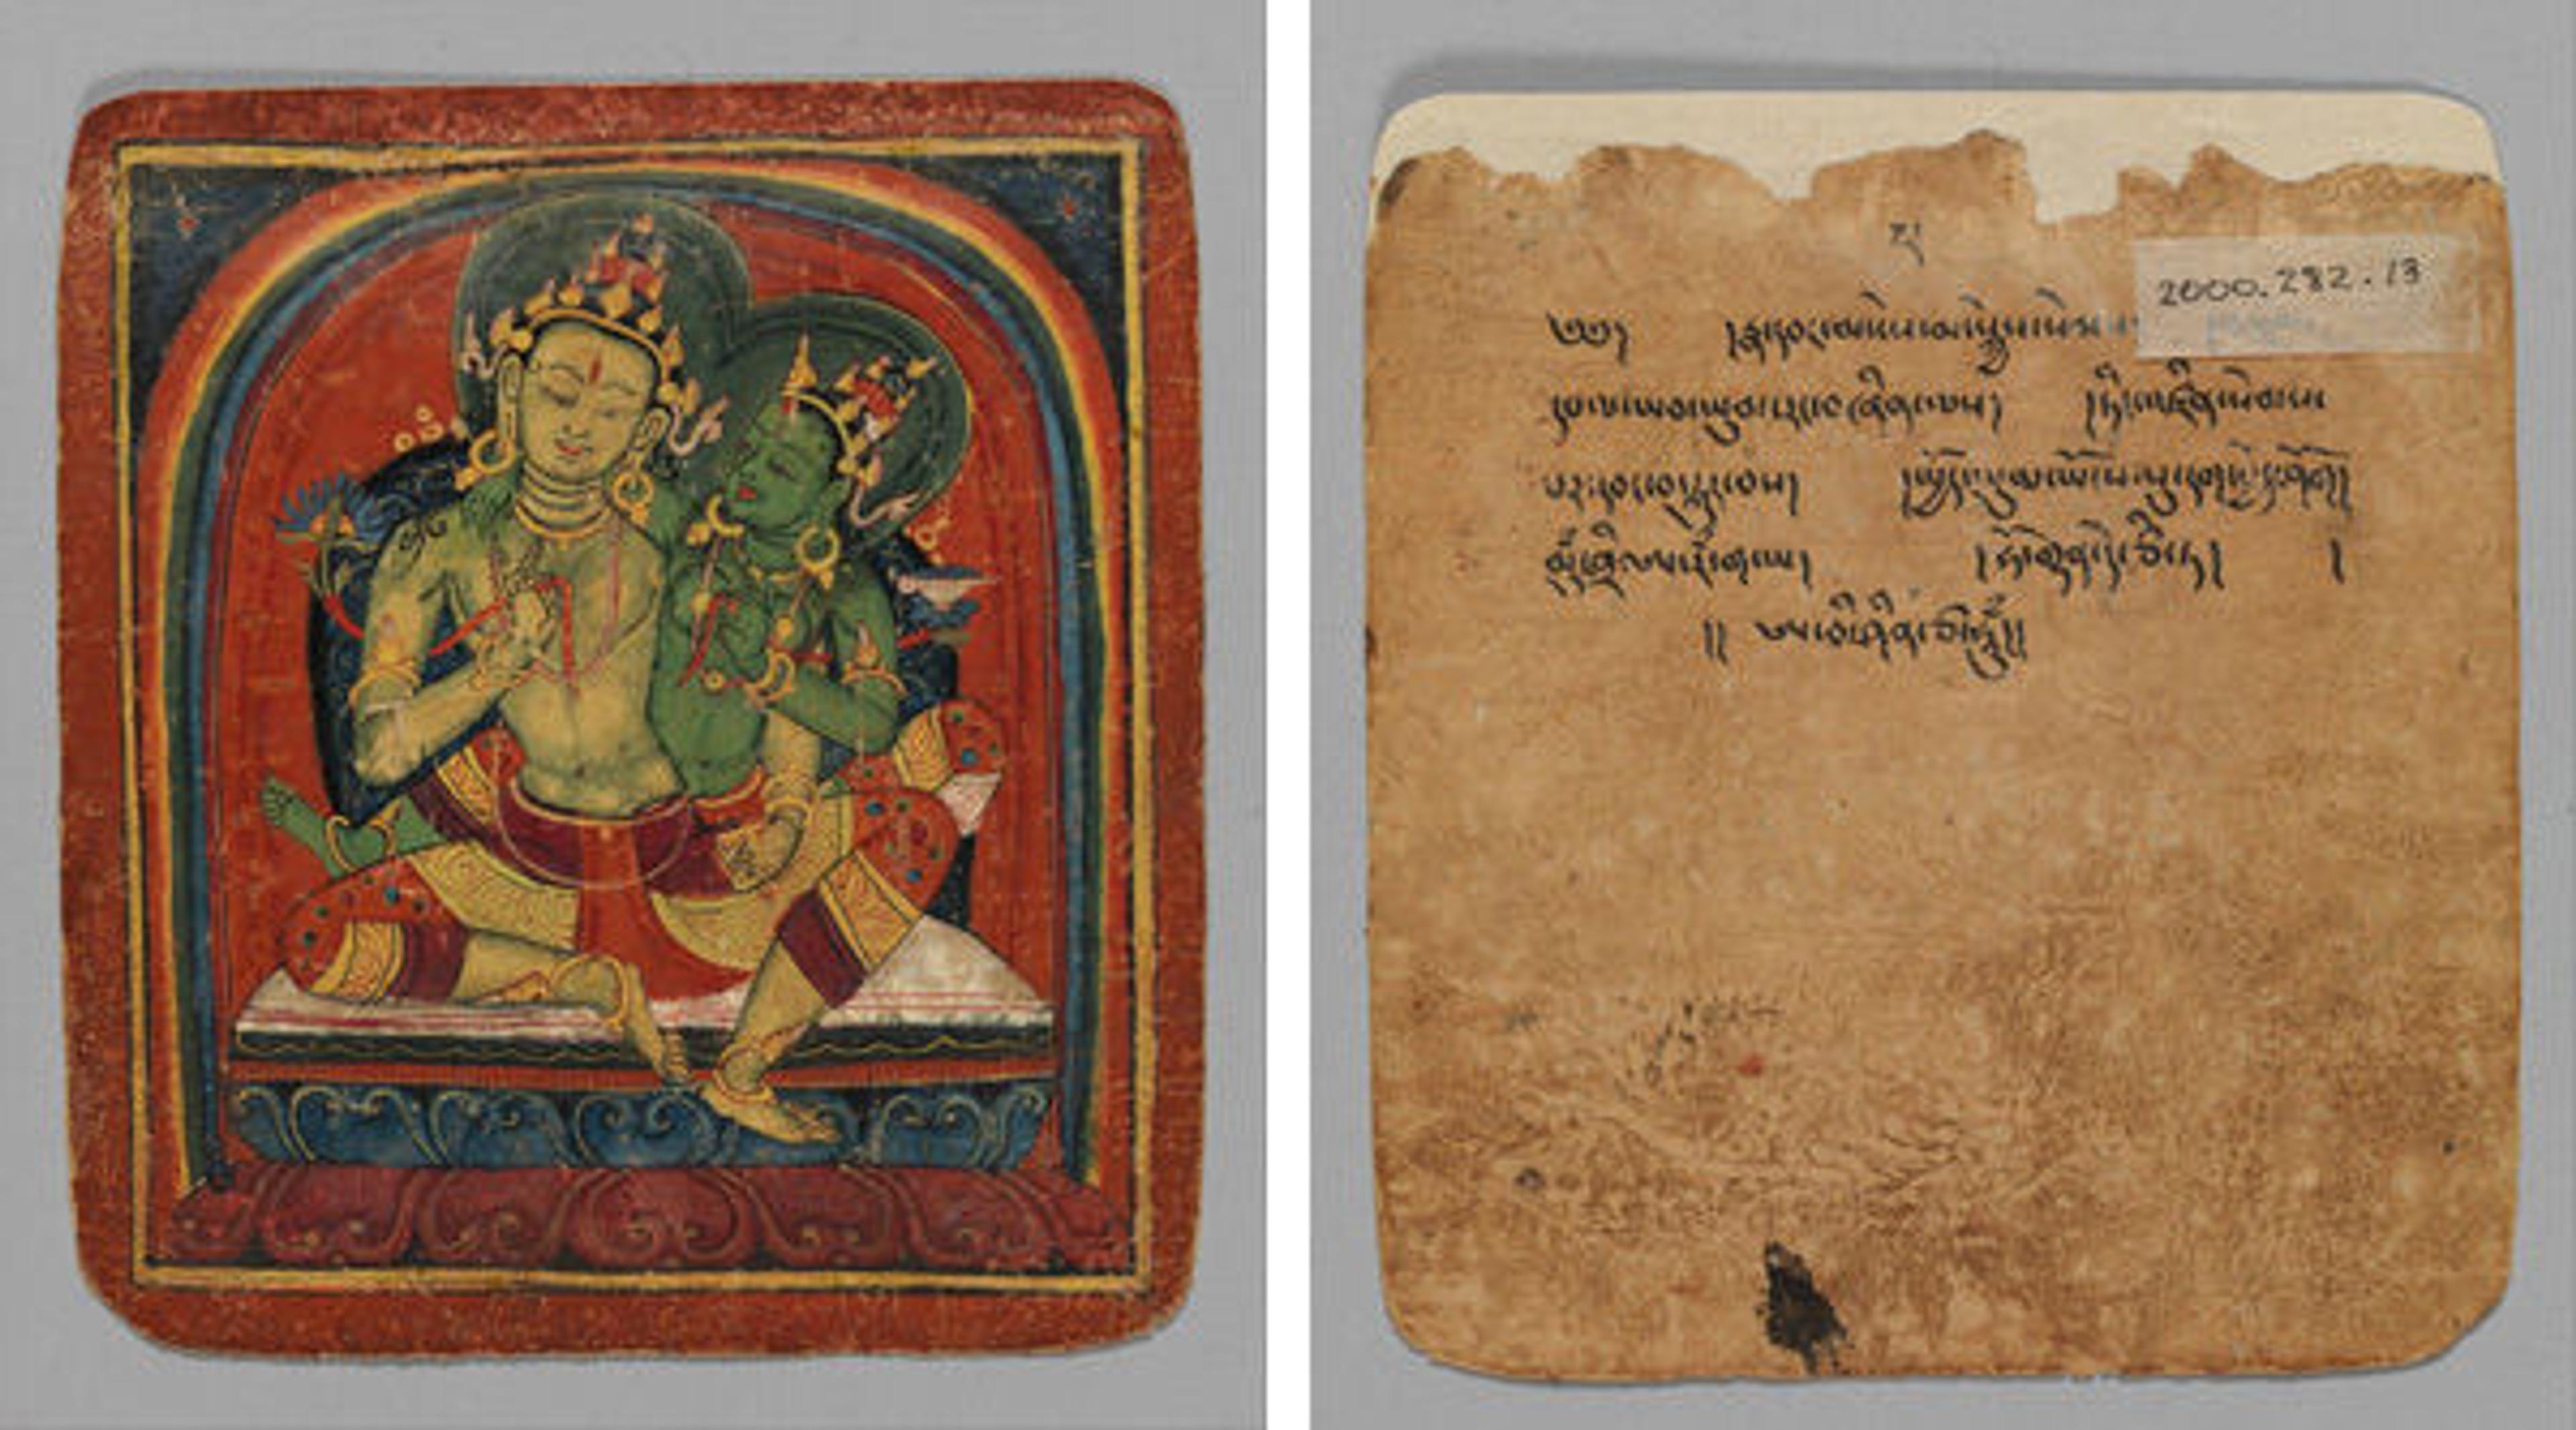 Initiation Card (Tsakalis), early 15th century. Tibet. 2000.282.13